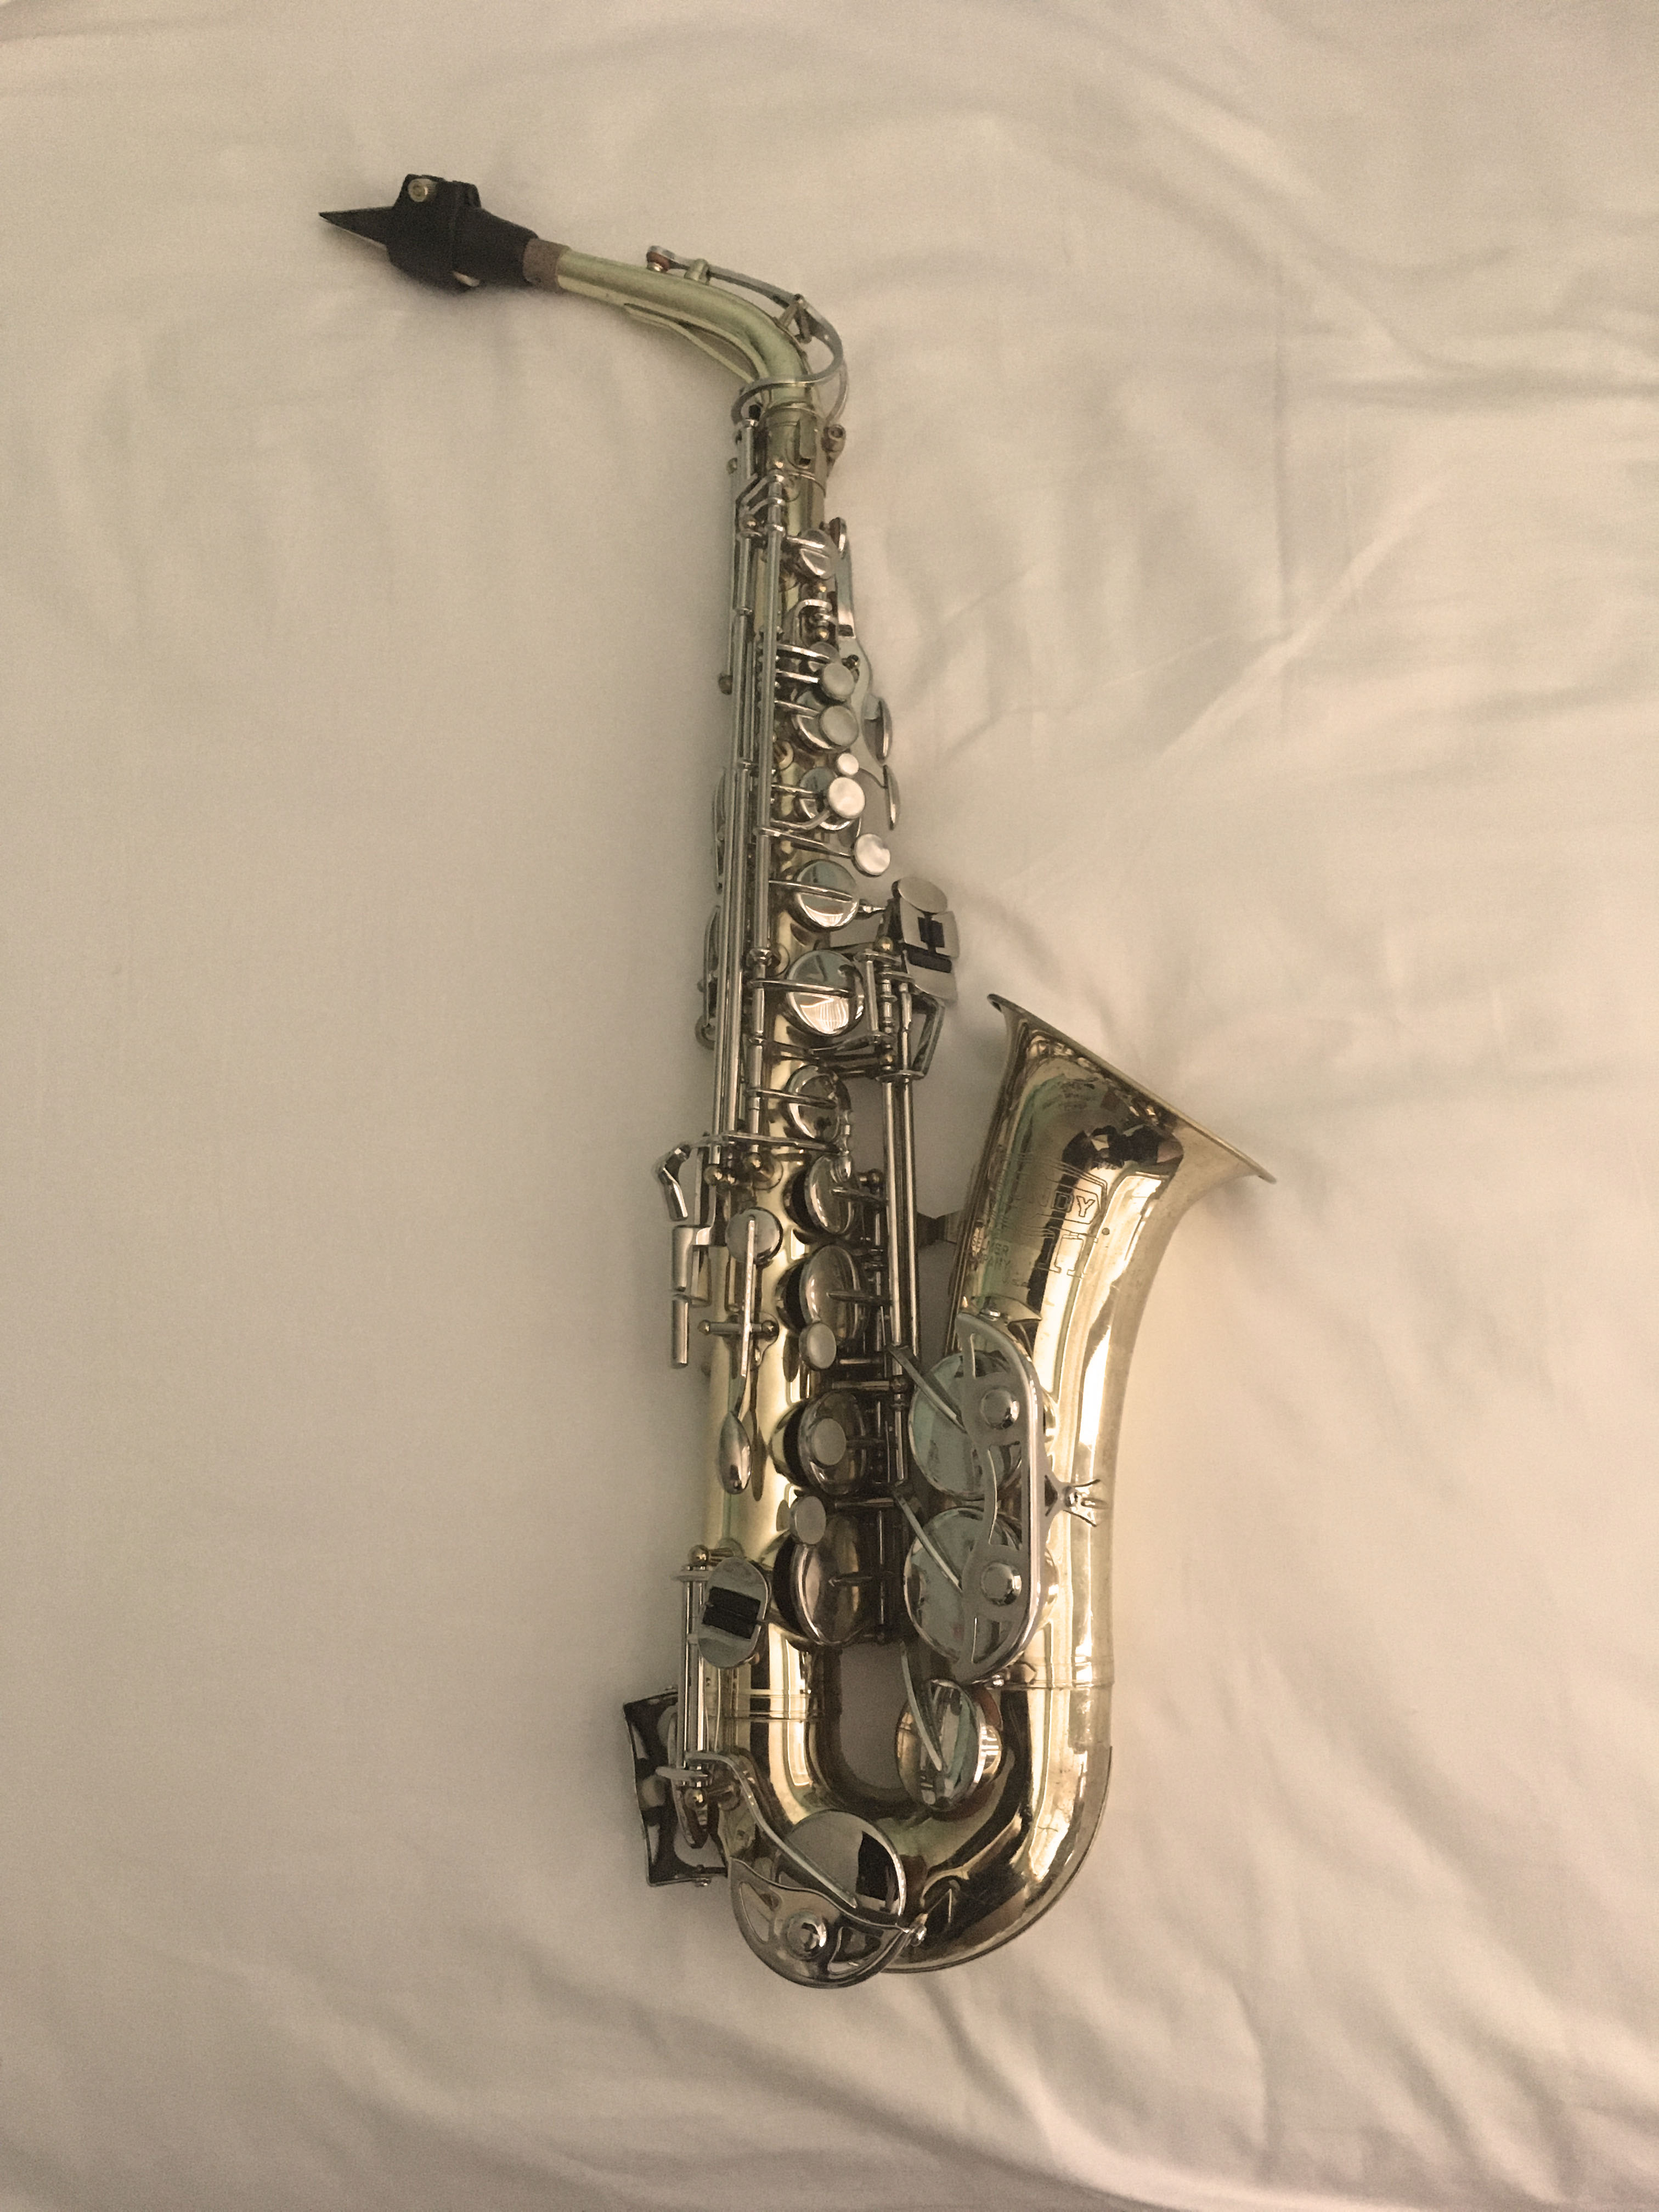 My saxophone